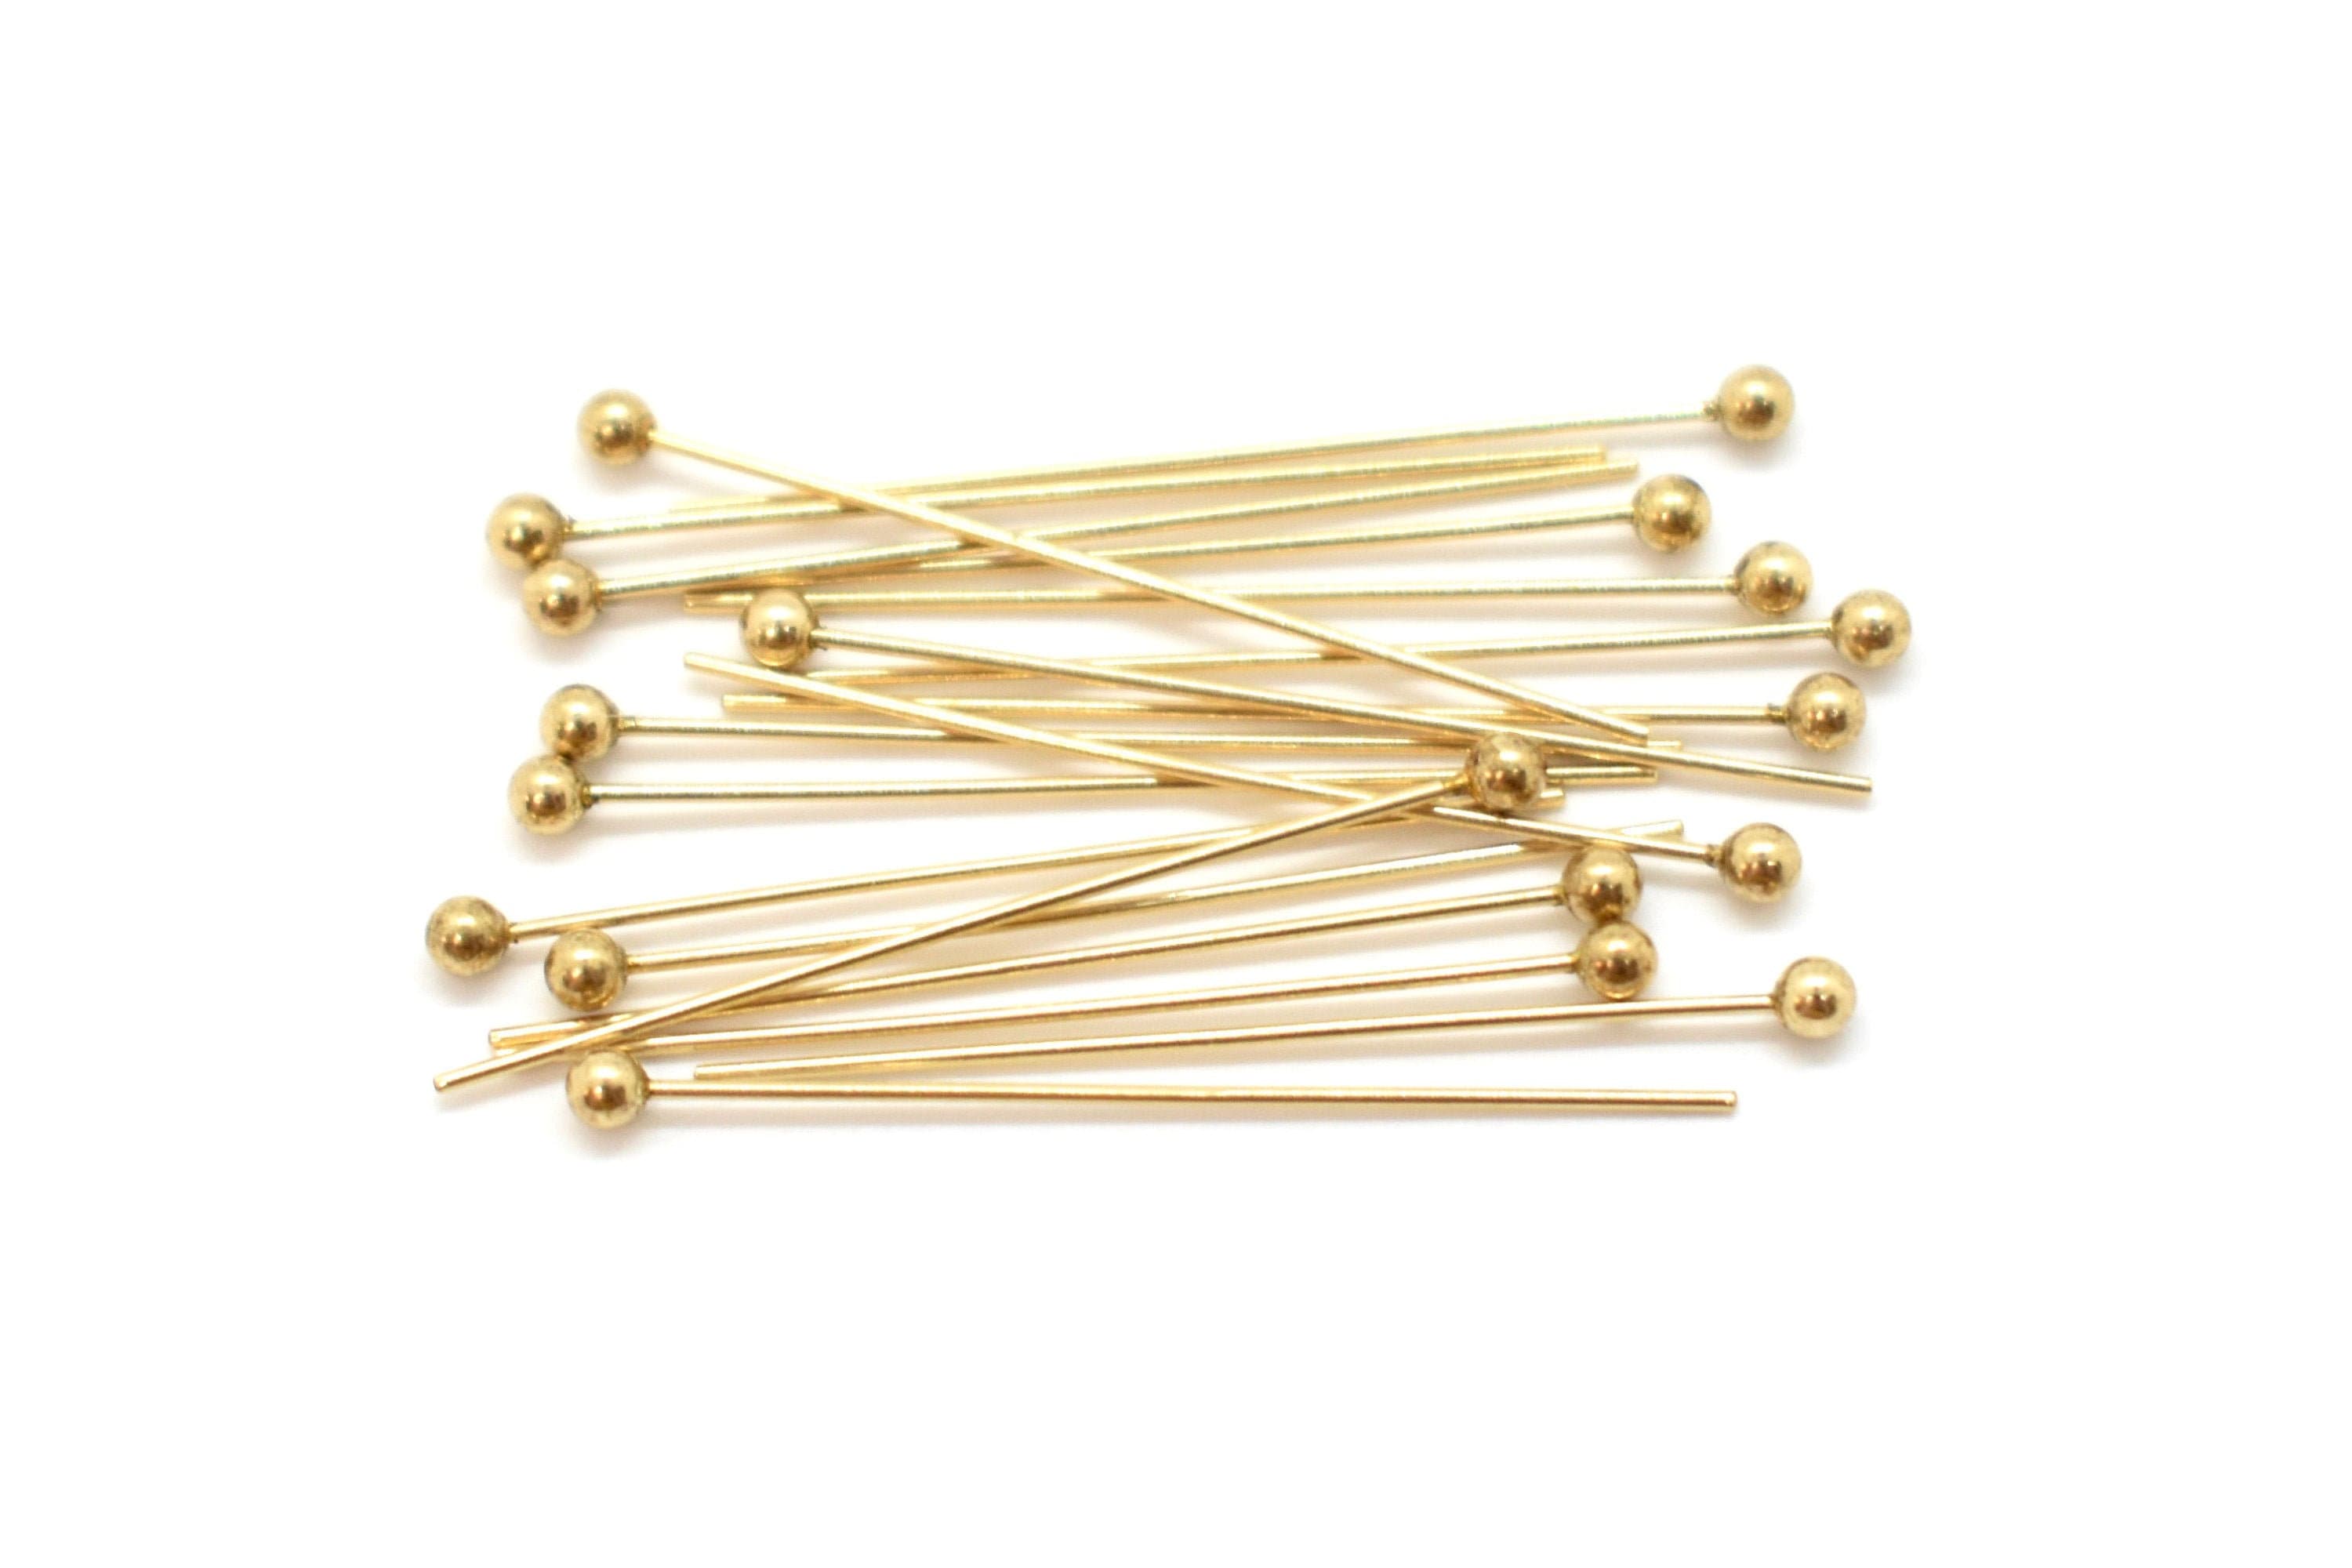 50pcs 14K Gold Filled Head Pins Flat Head, Nail Head Pin, 0.4mm, 26 Gauge,  Earrings Supplies, Gold Filled Jewelry, Headpins, GF Supplies -   Australia